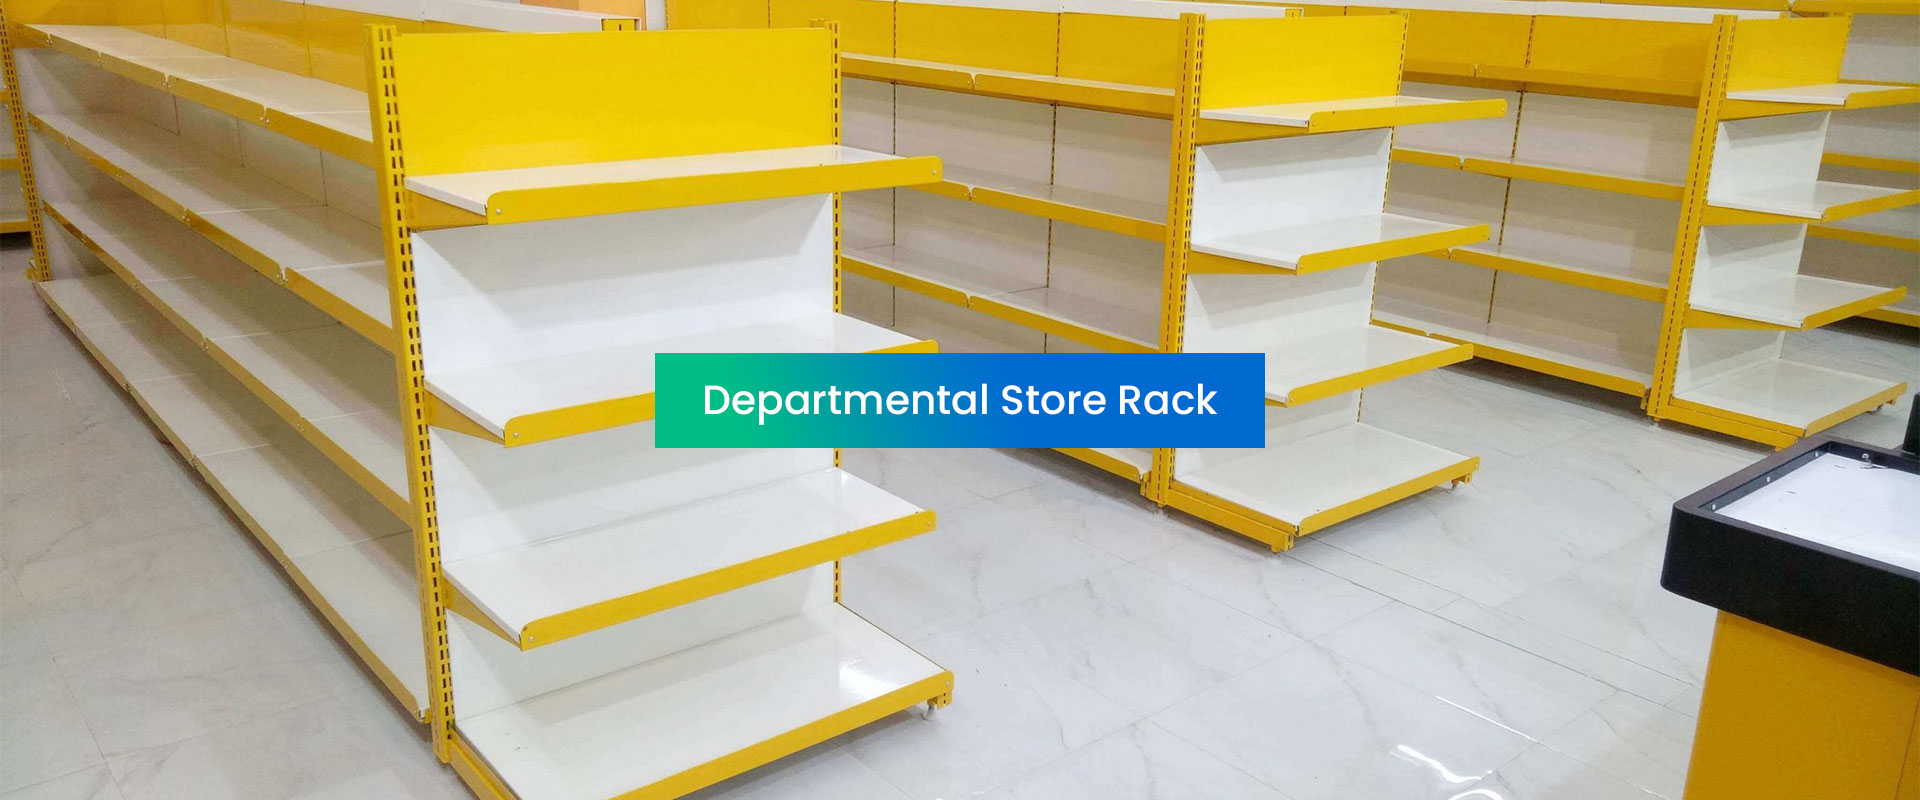 Departmental Store Racks